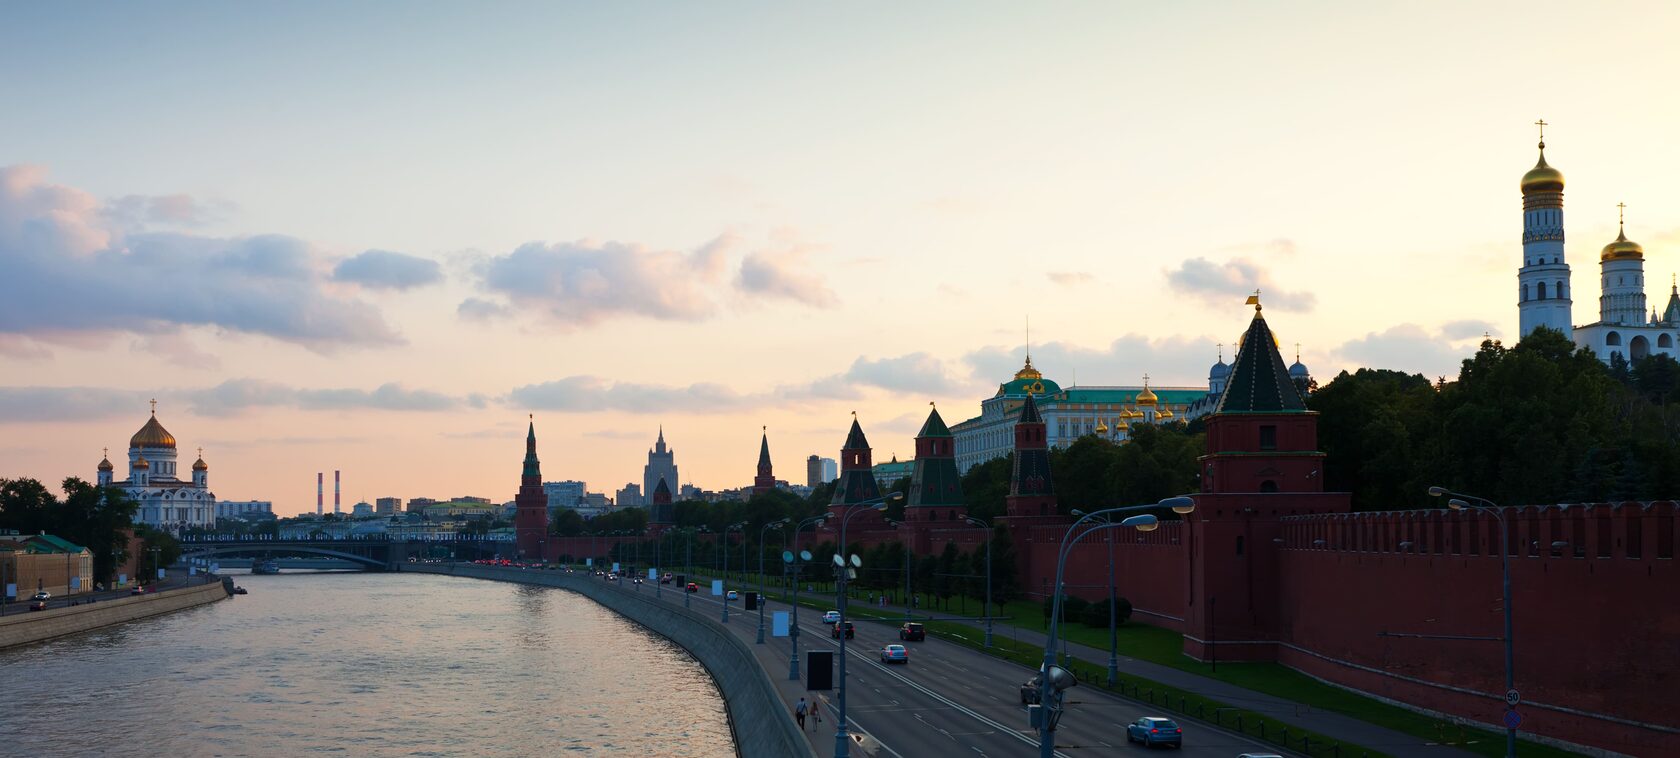 Московский Кремль панорама. Москва Сити и Кремль. Page москва